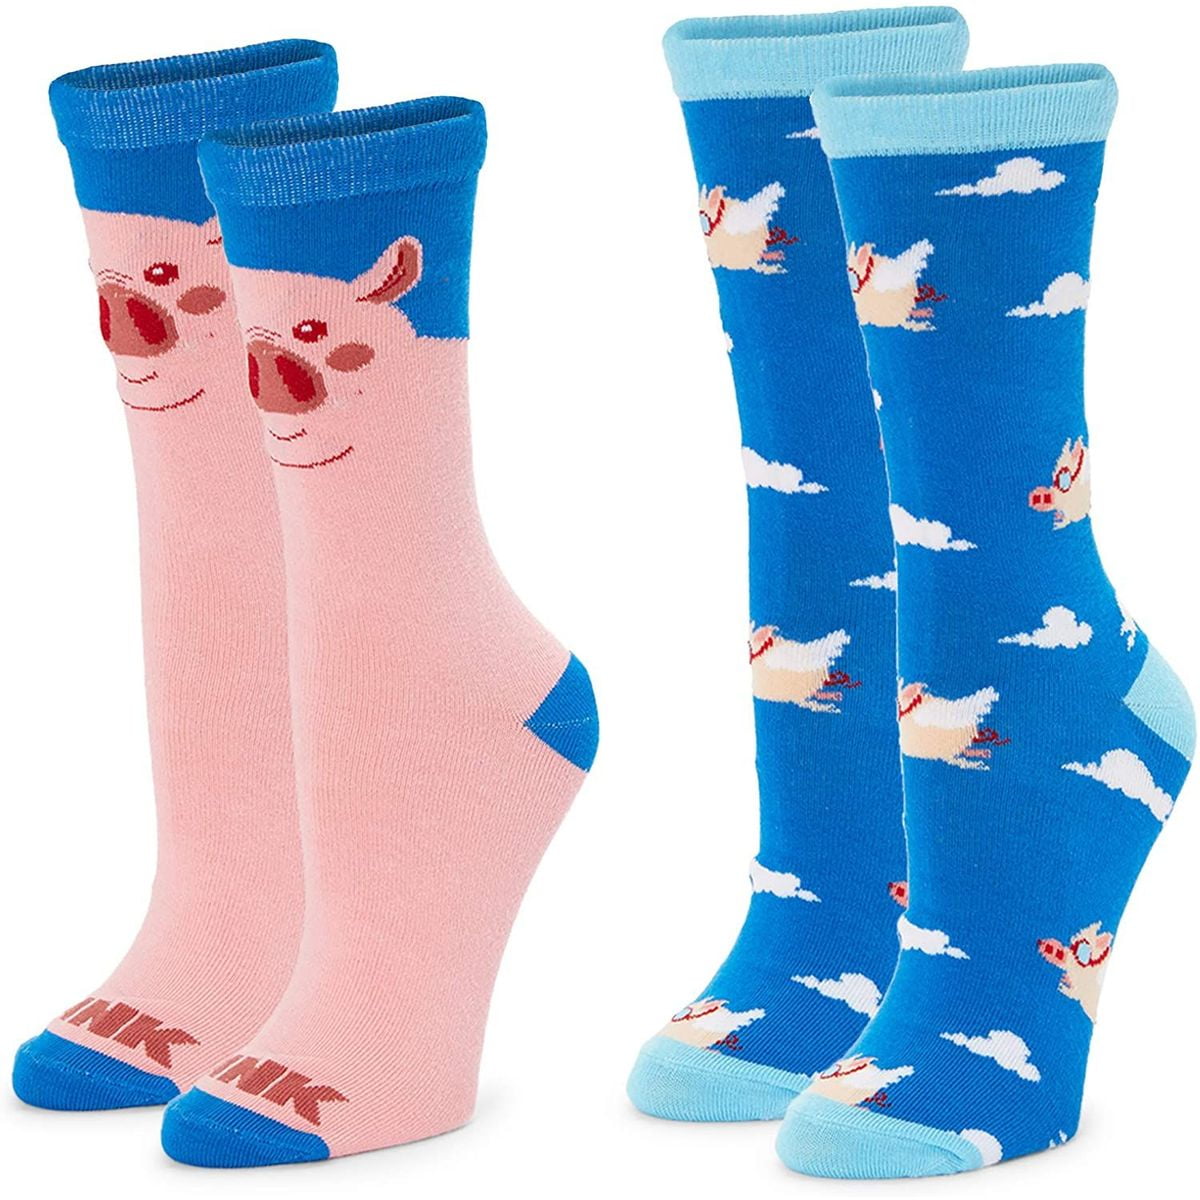 Cute Animal Unisex Funny Casual Crew Socks Athletic Socks For Boys Girls Kids Teenagers